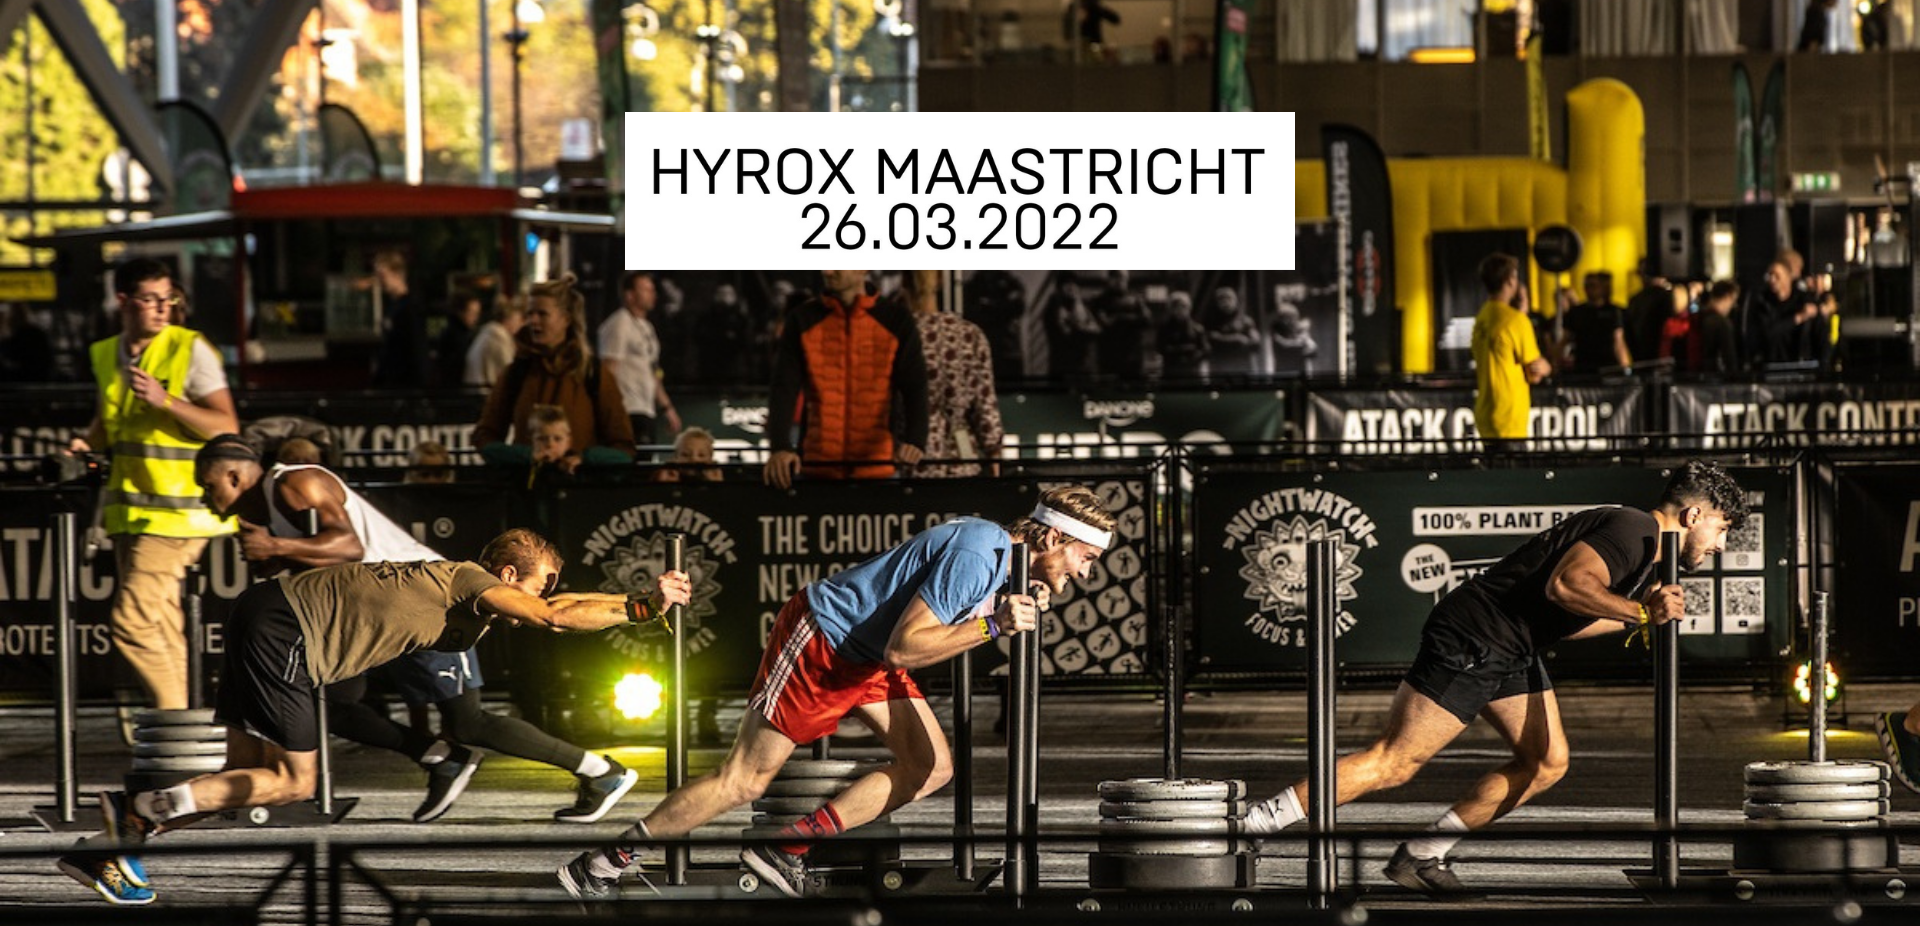 HYROX Maastricht